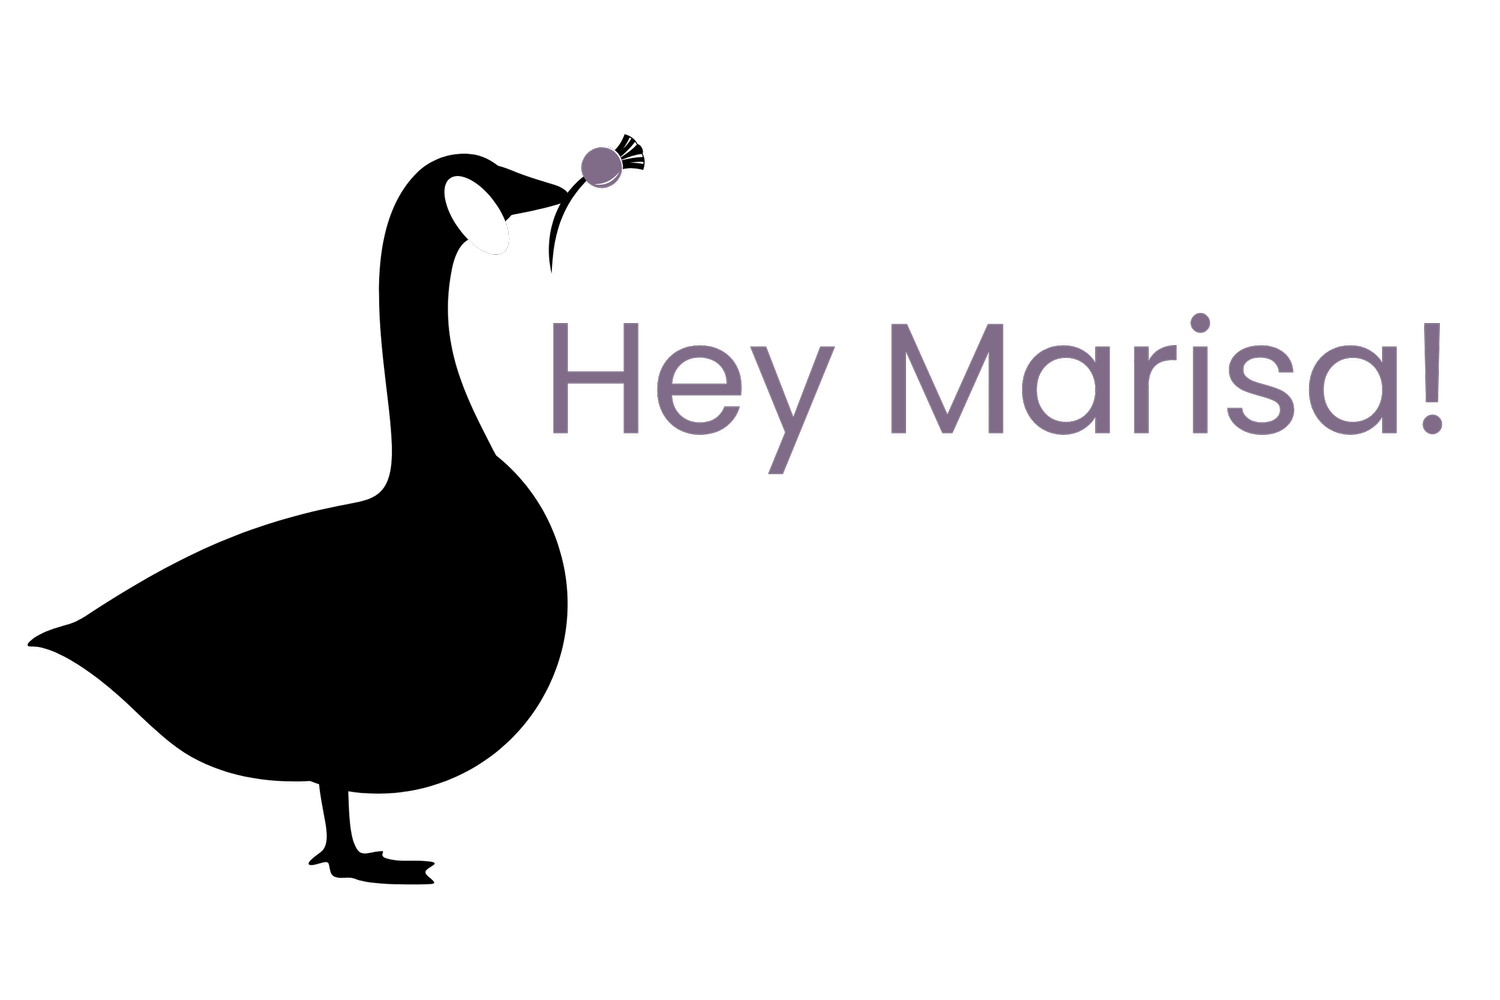 Hey Marisa!